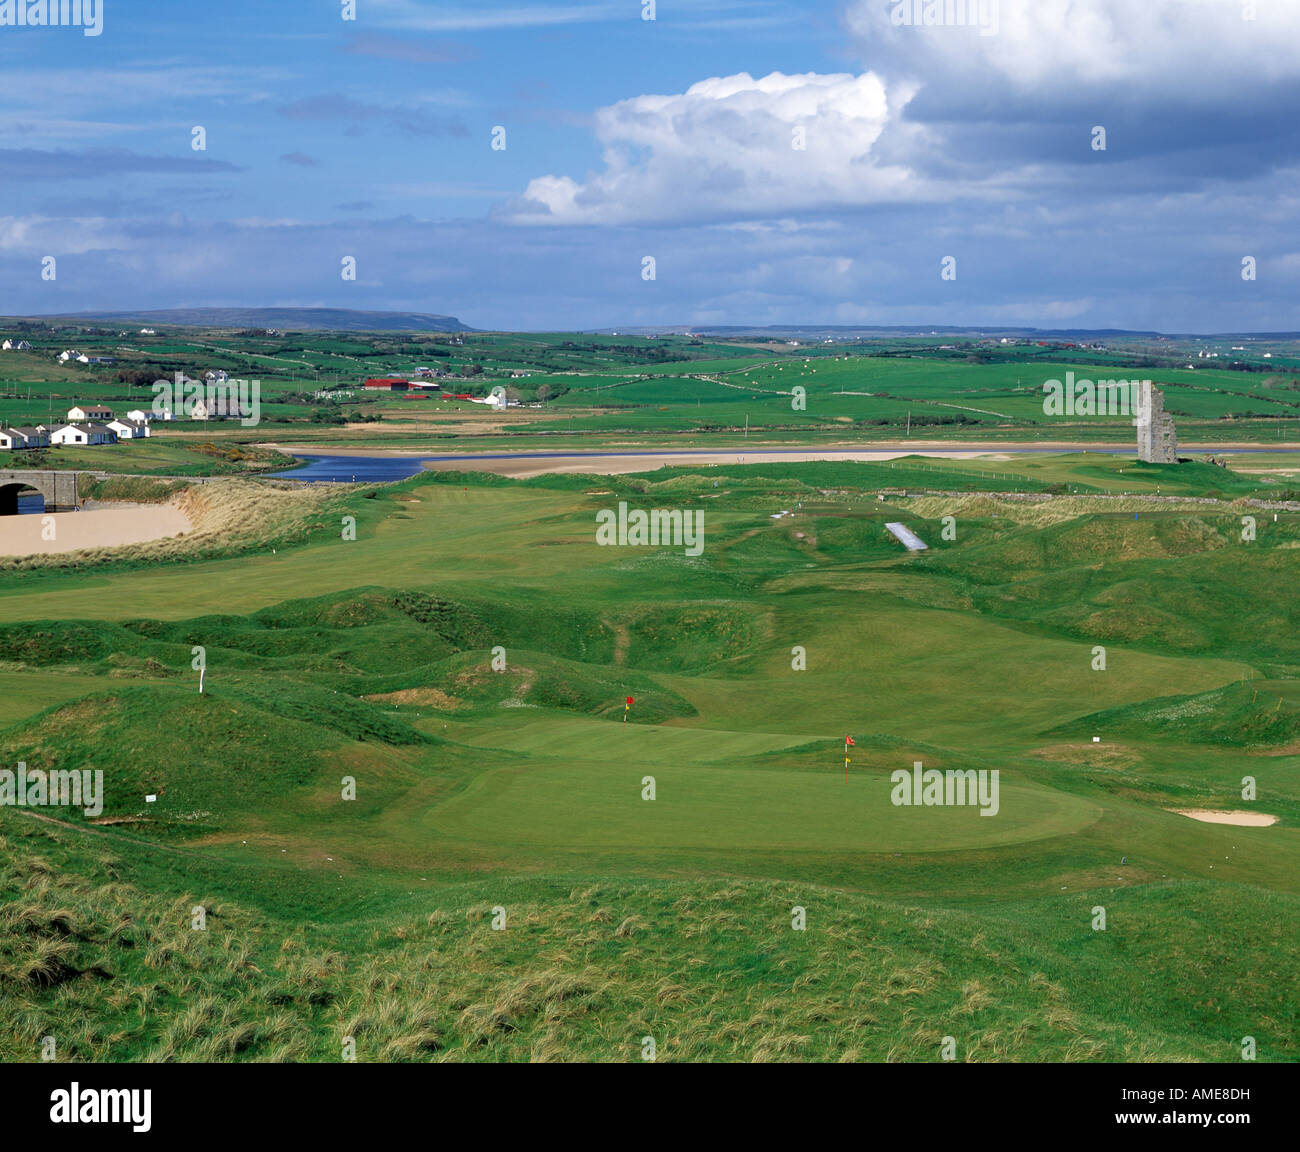 18-Loch-Golfplatz am Atlantik Westküste Irlands, Stockfoto